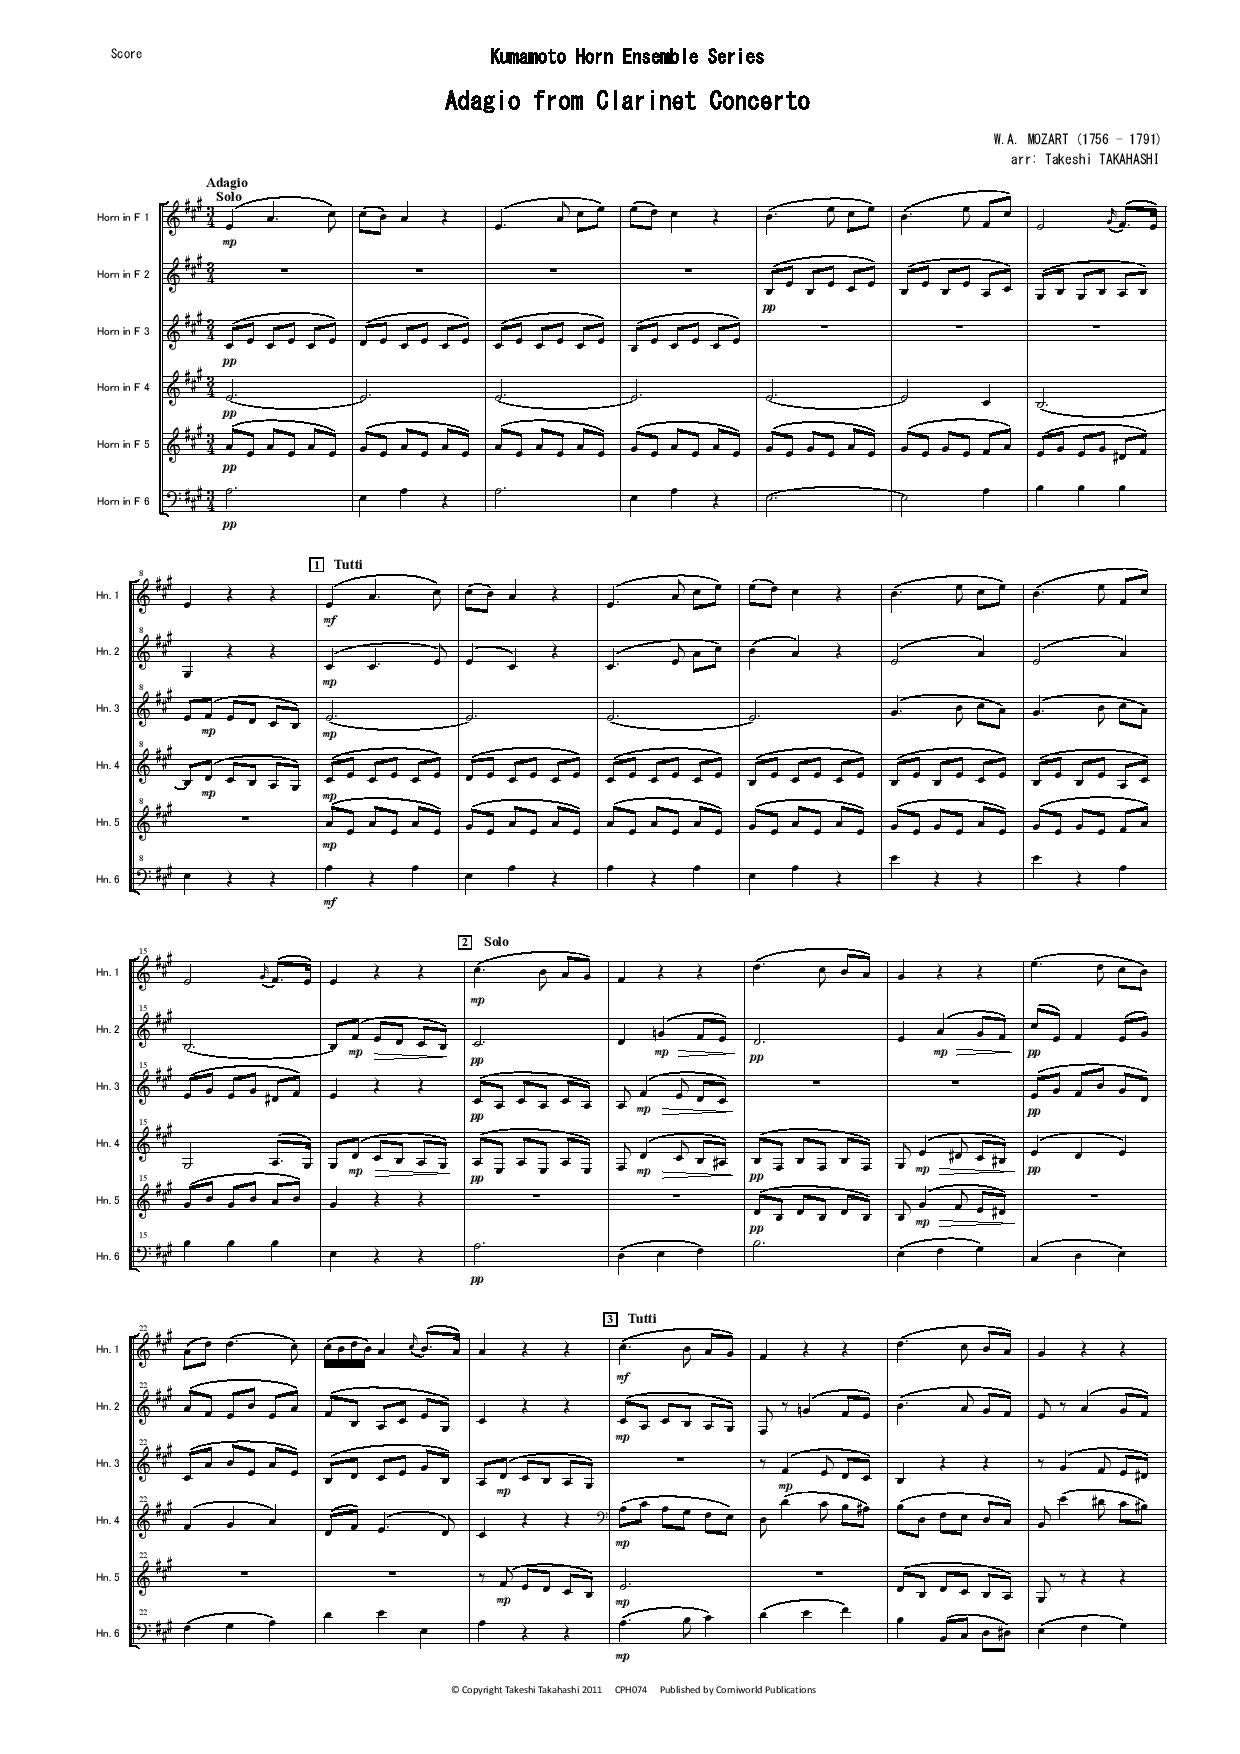 Adagio from Clarinet Concerto (Mozart) CPH074